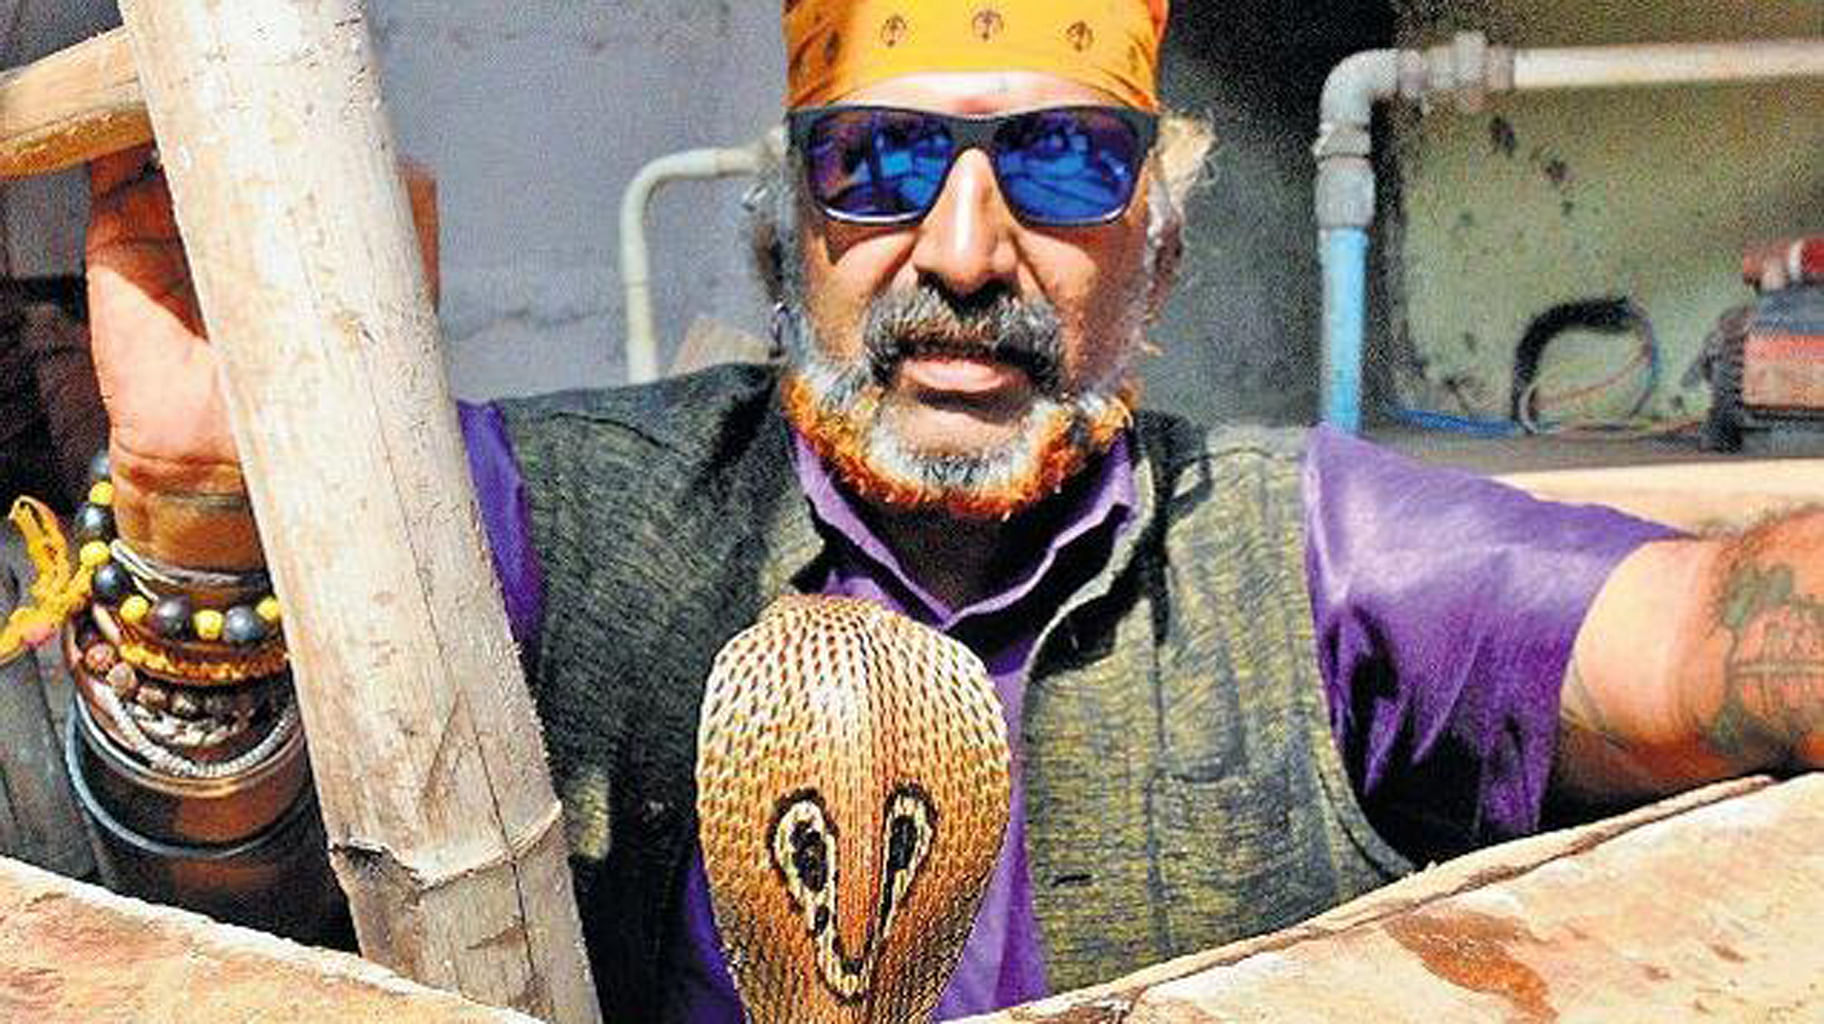 Snake Shyam with snake. (Photo Courtesy: The News Minute)